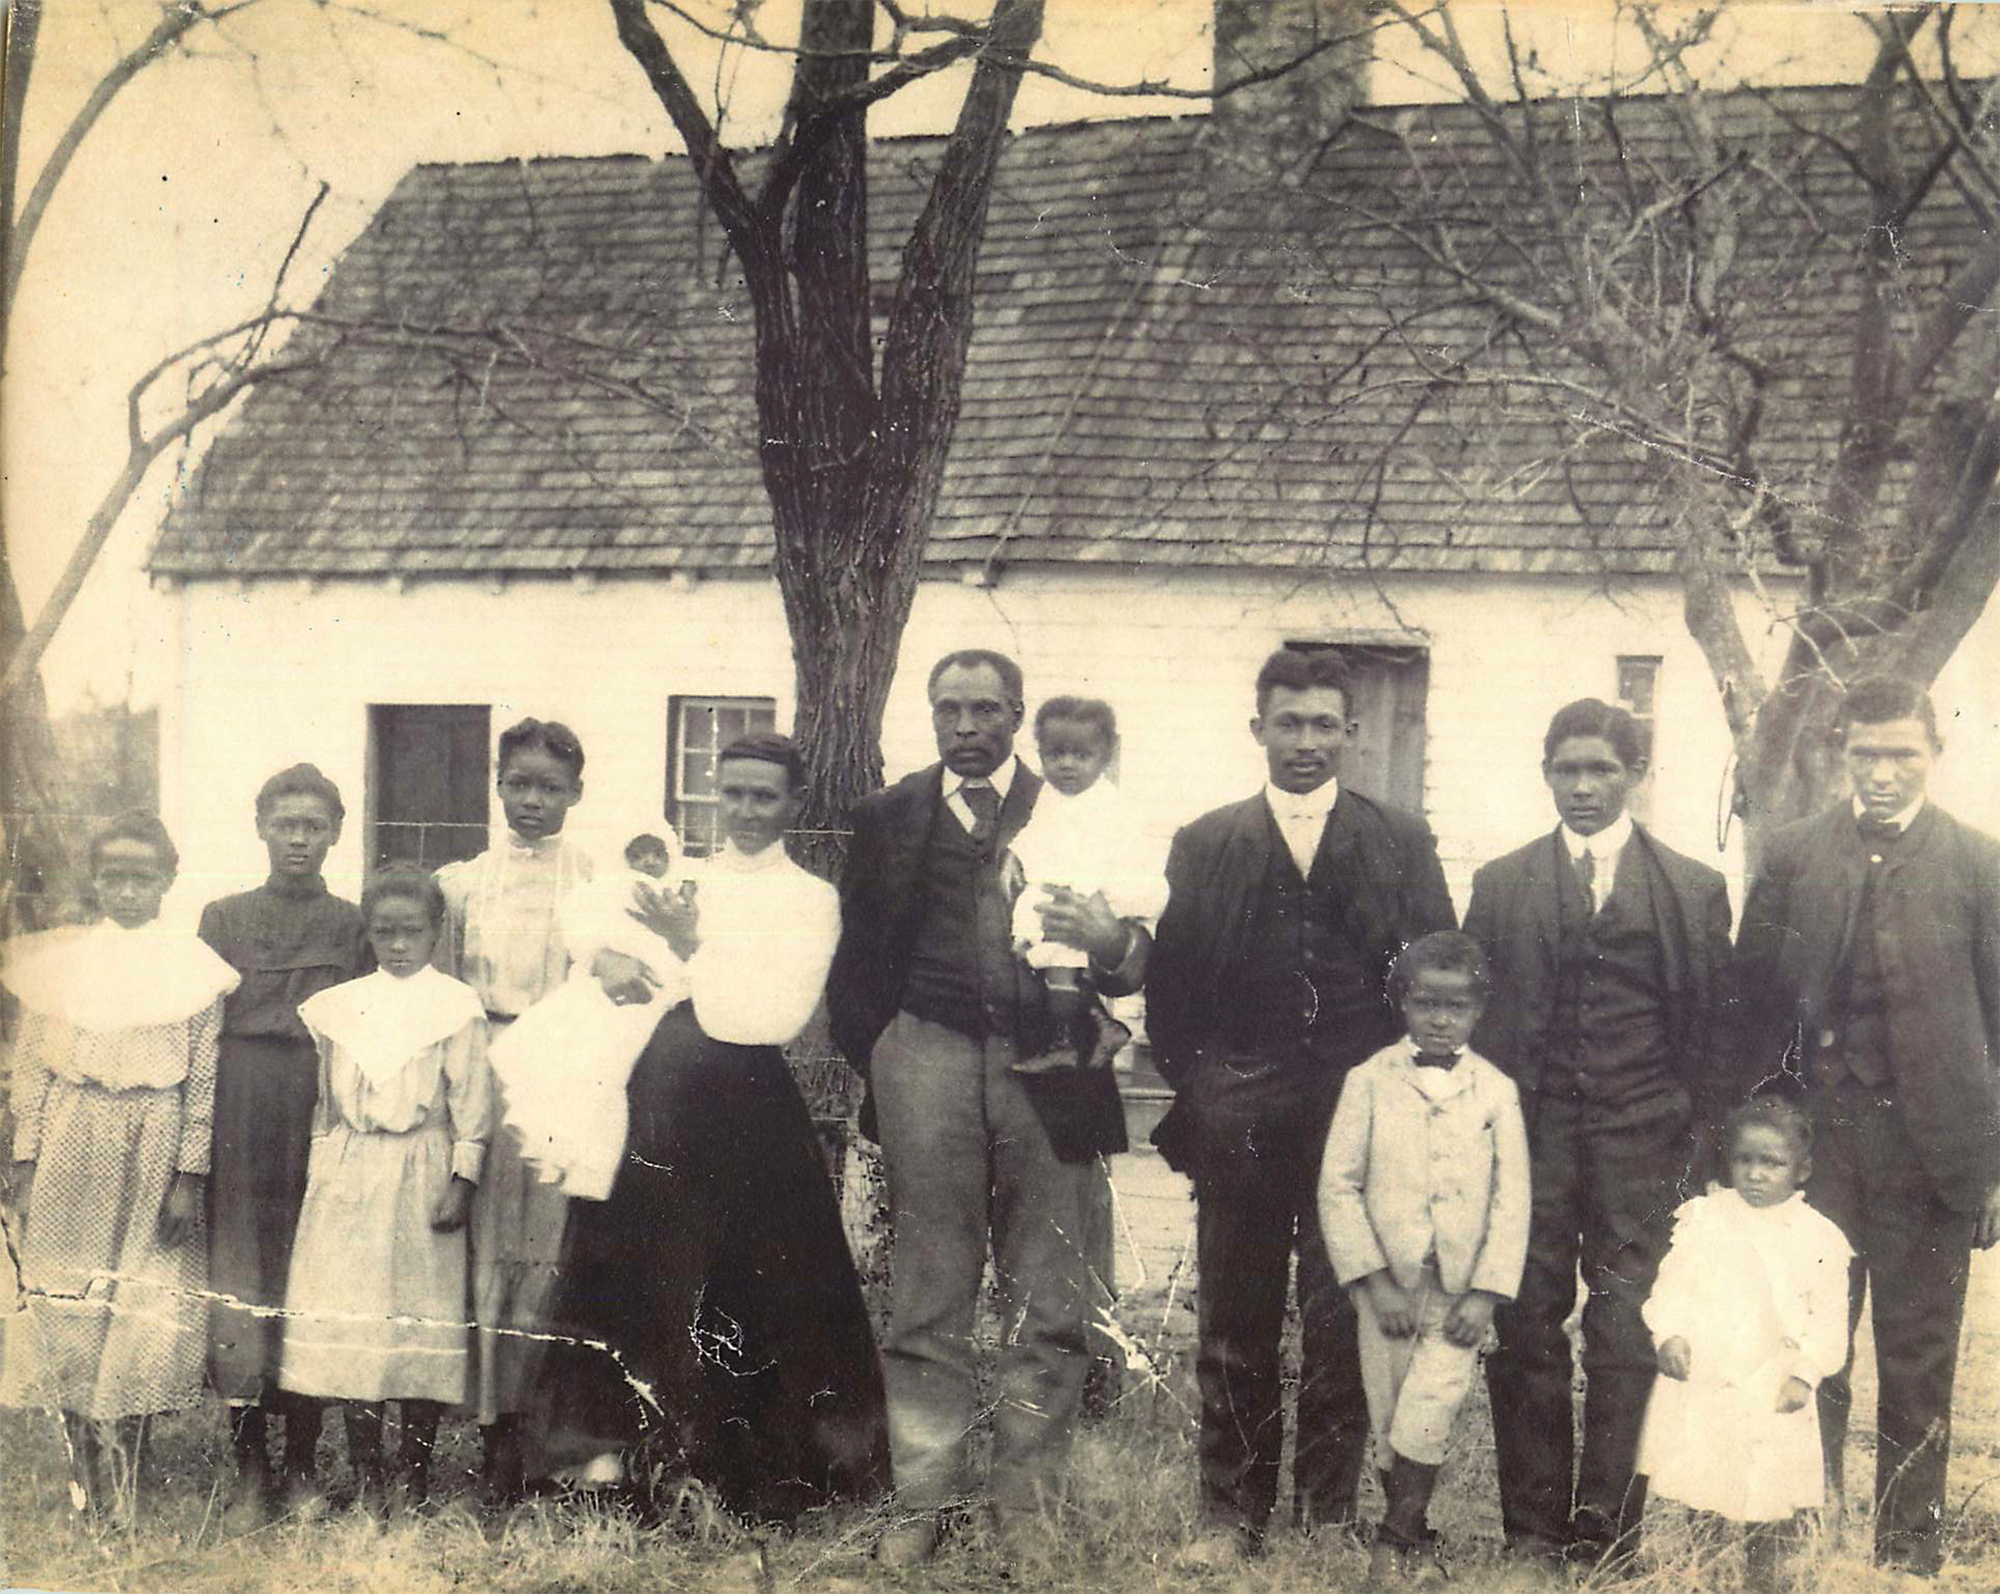 Before Family portrait, c. 1900